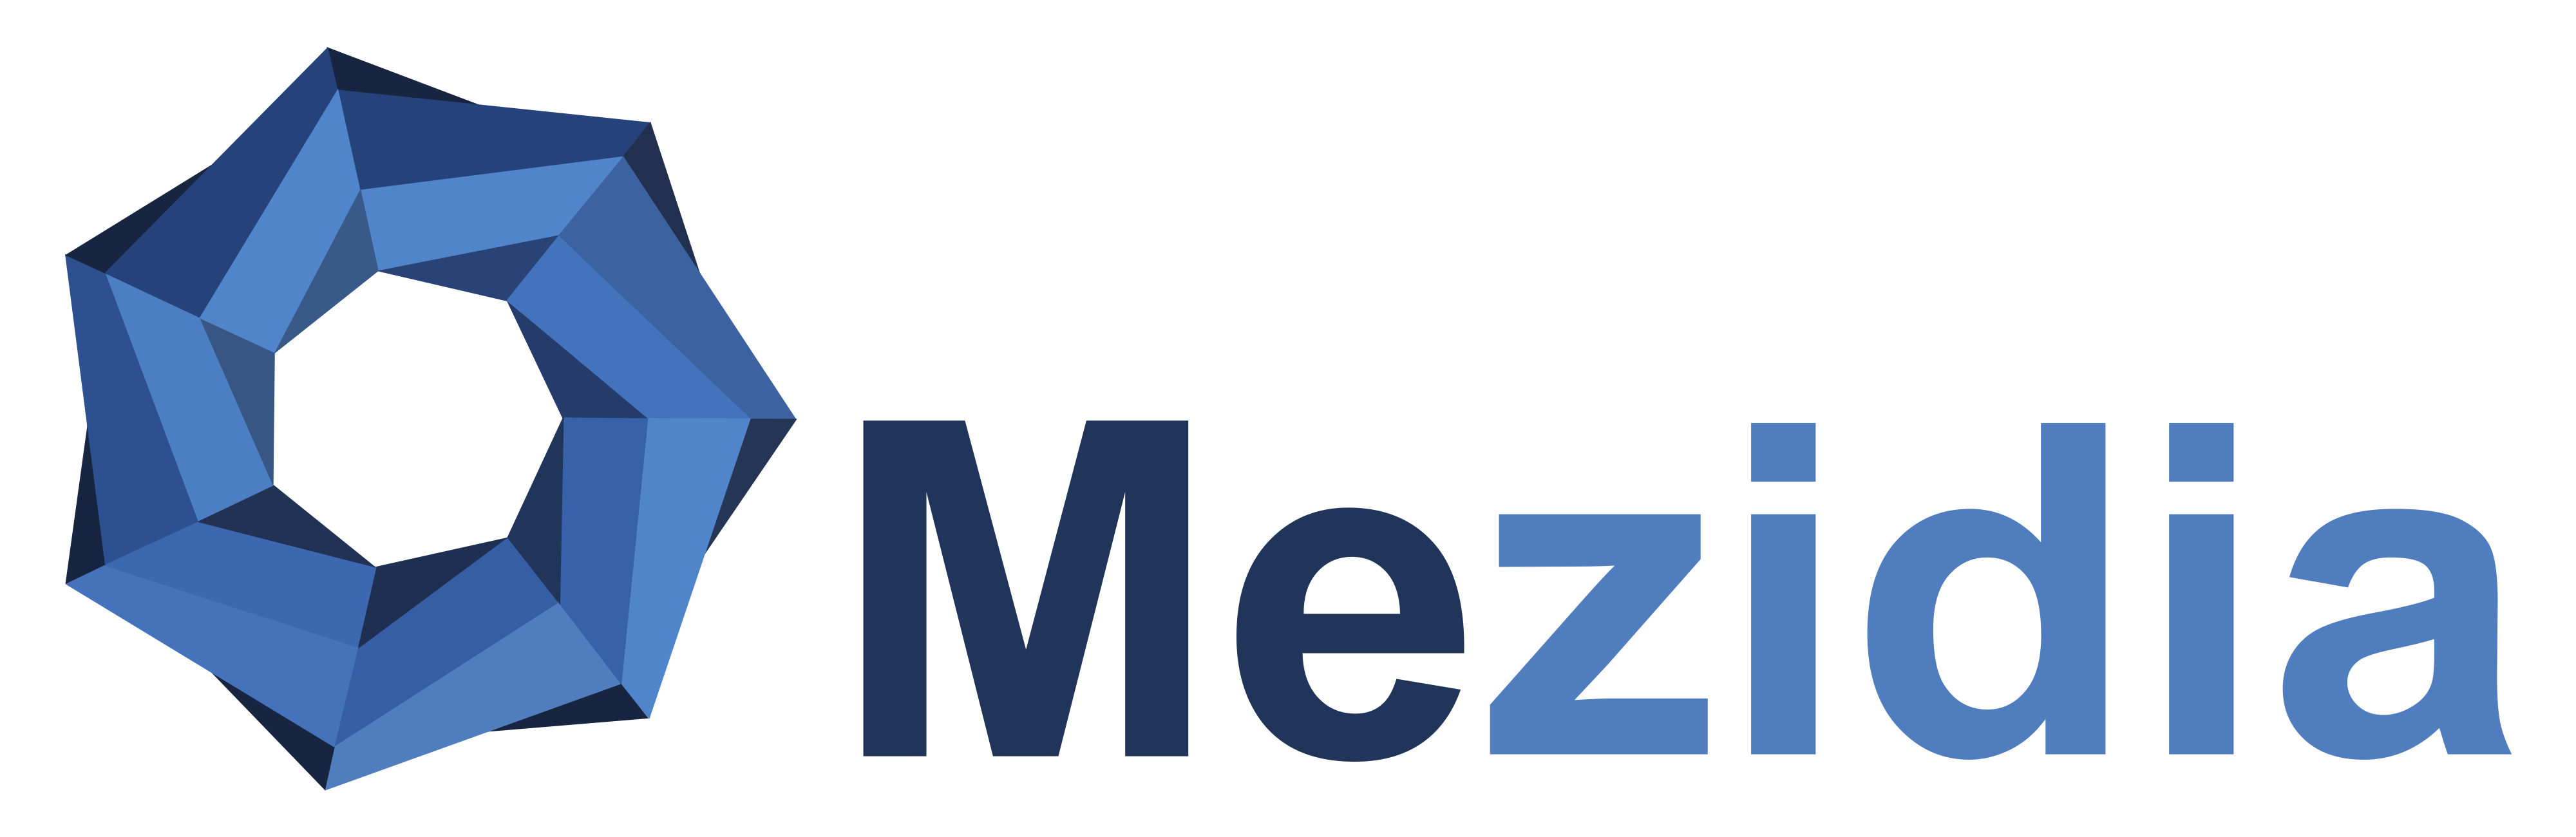 Mezidia logo